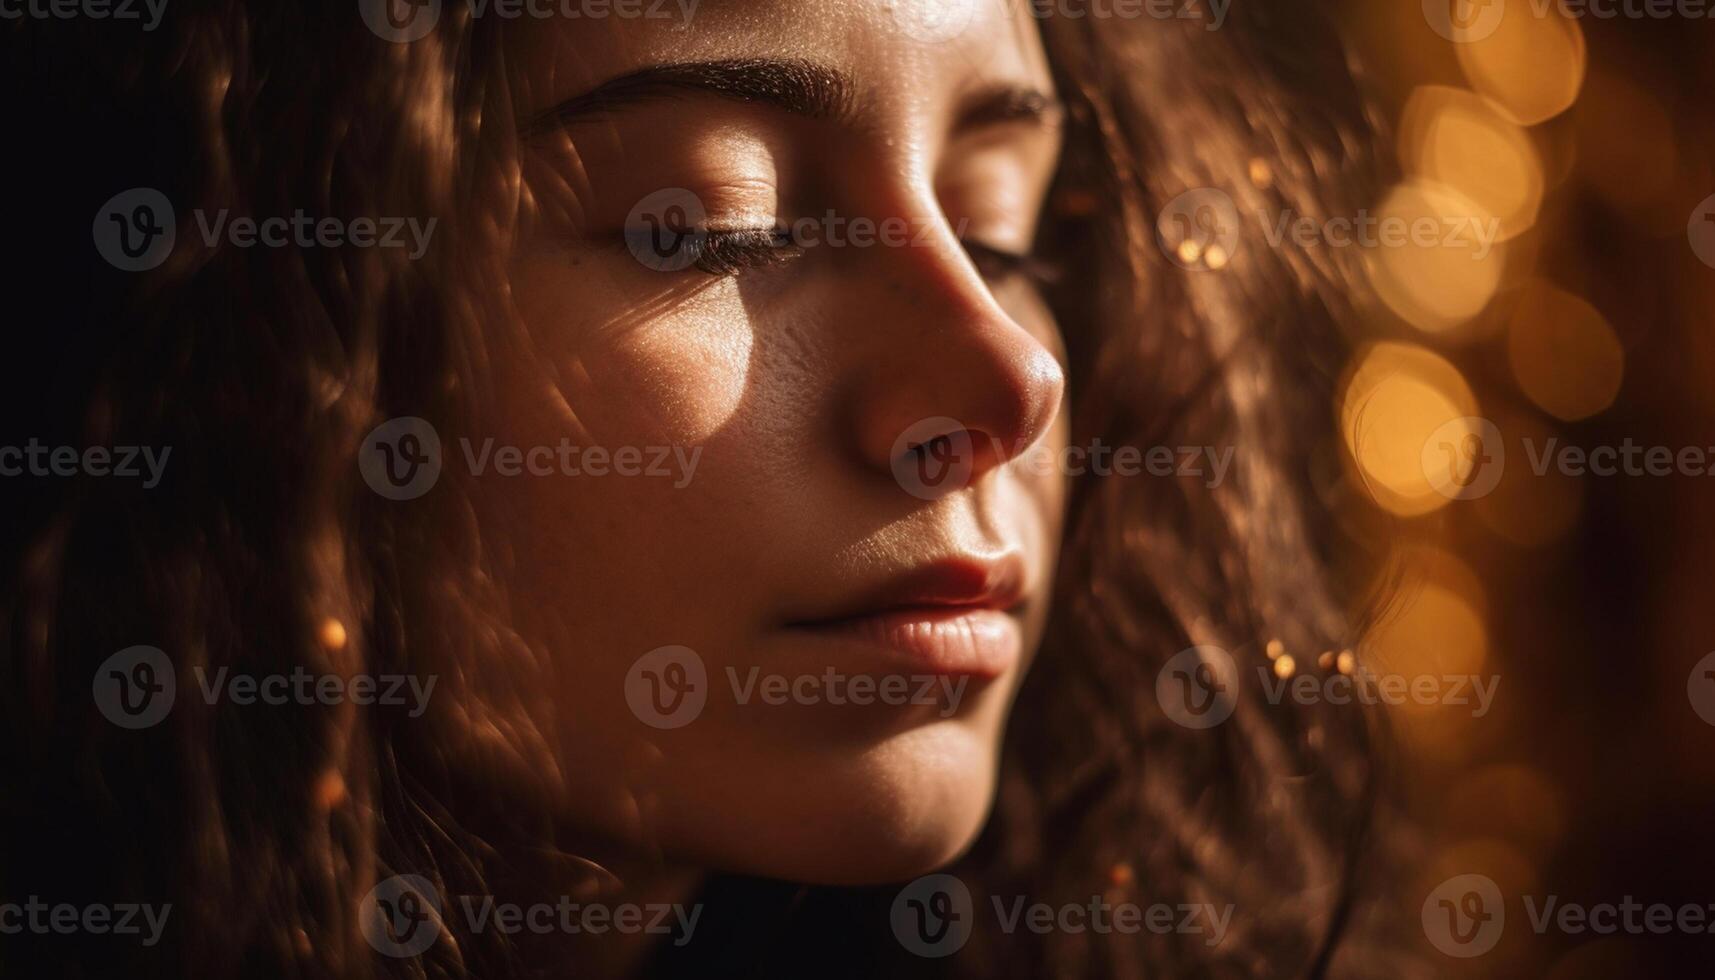 AI generated A beautiful young woman smiling, enjoying nature serene sunset generated by AI photo